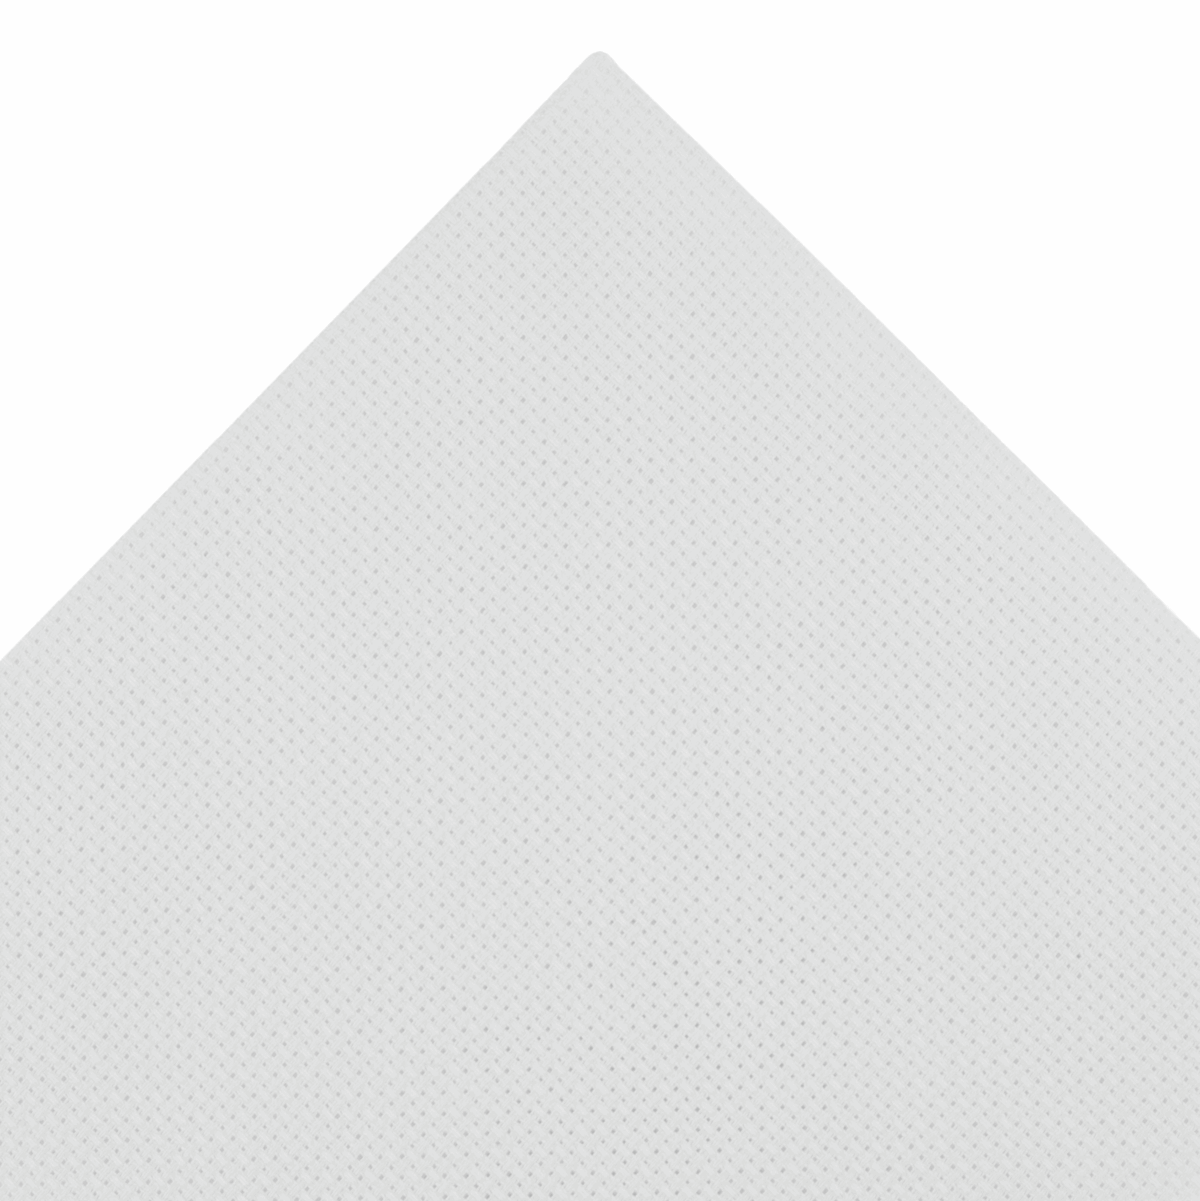 Aida Needlecraft Fabric - 14 Count - 45 x 30cm - White